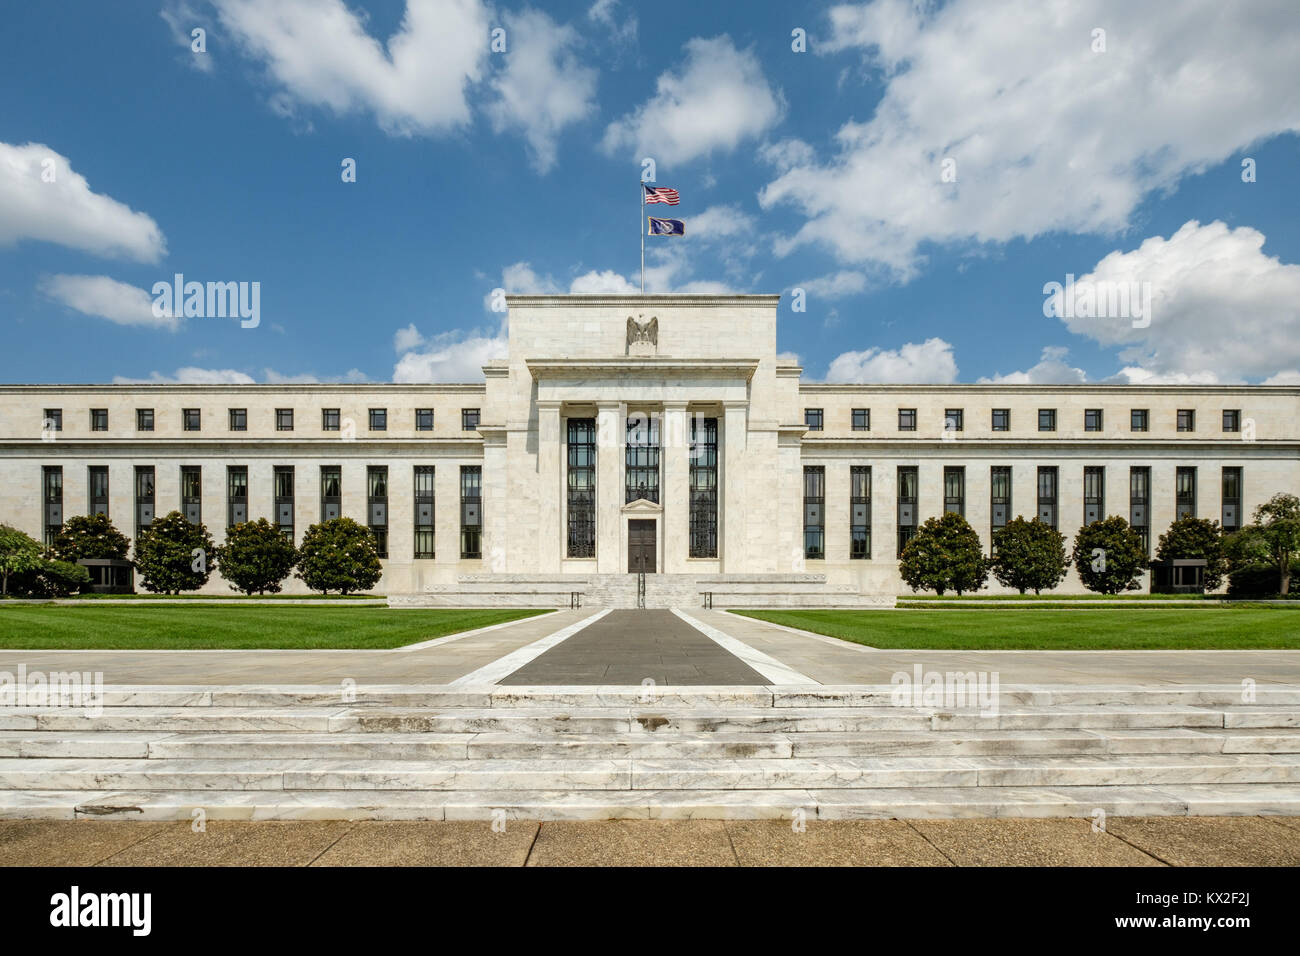 Marriner S. Eccles Federal Reserve Board Gebäude, 20151 Constitution Avenue NW, Washington DC Stockfoto